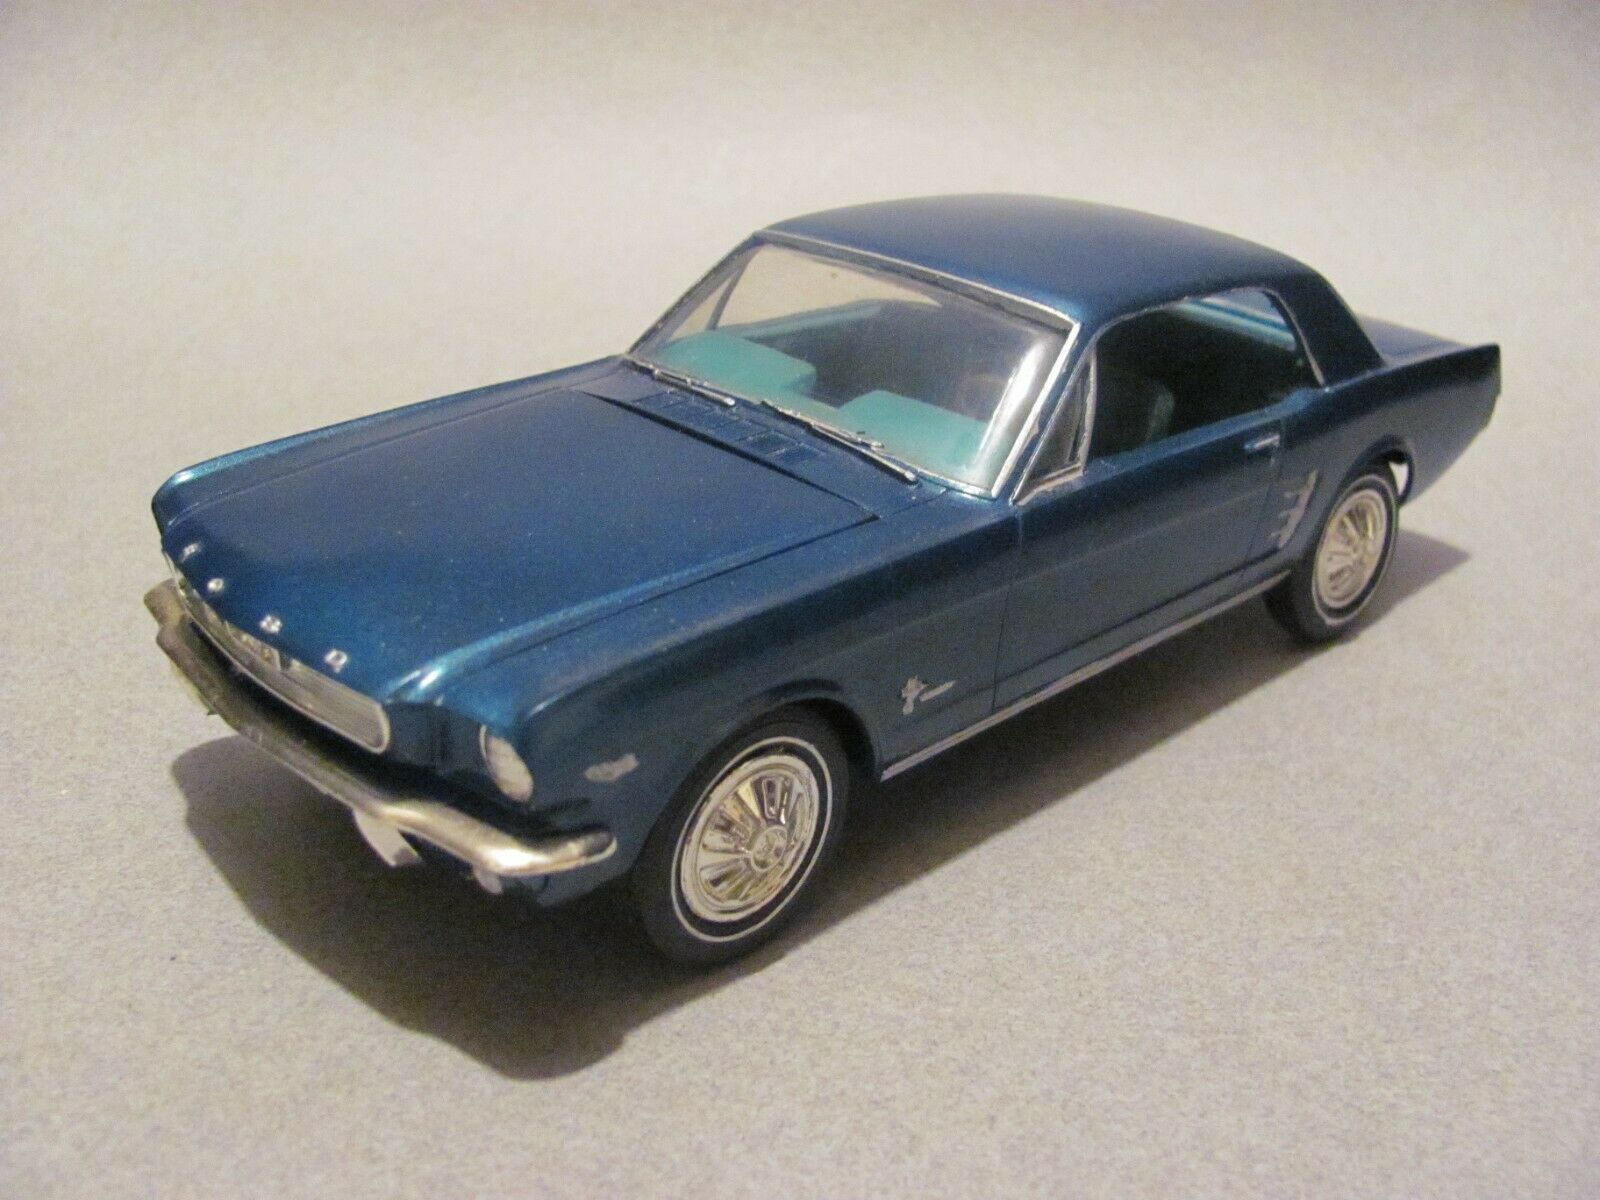 Built Amt 1966 Ford Mustang Hardtop 1/25 Scale Model Kit - Dark Turquoise Met.